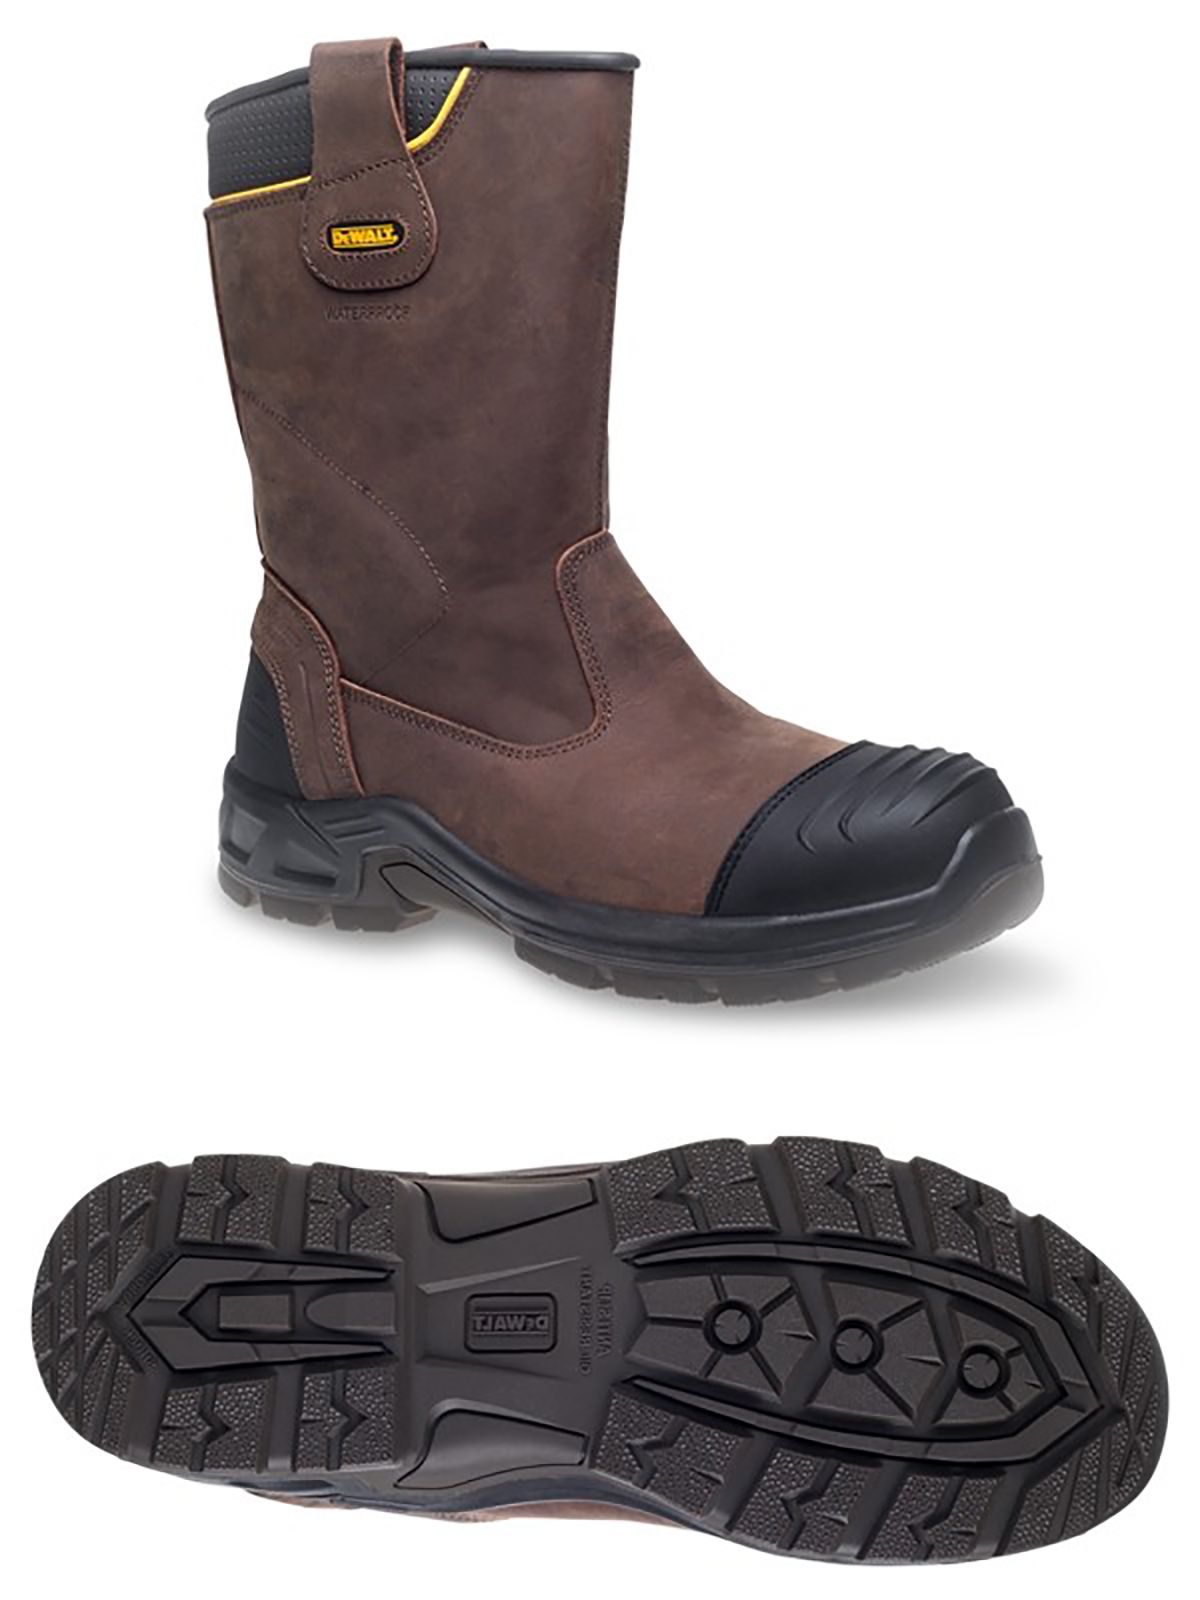 DeWALT Millington Brown Composite Toe Capped Safety Boots, UK 12, EU 46